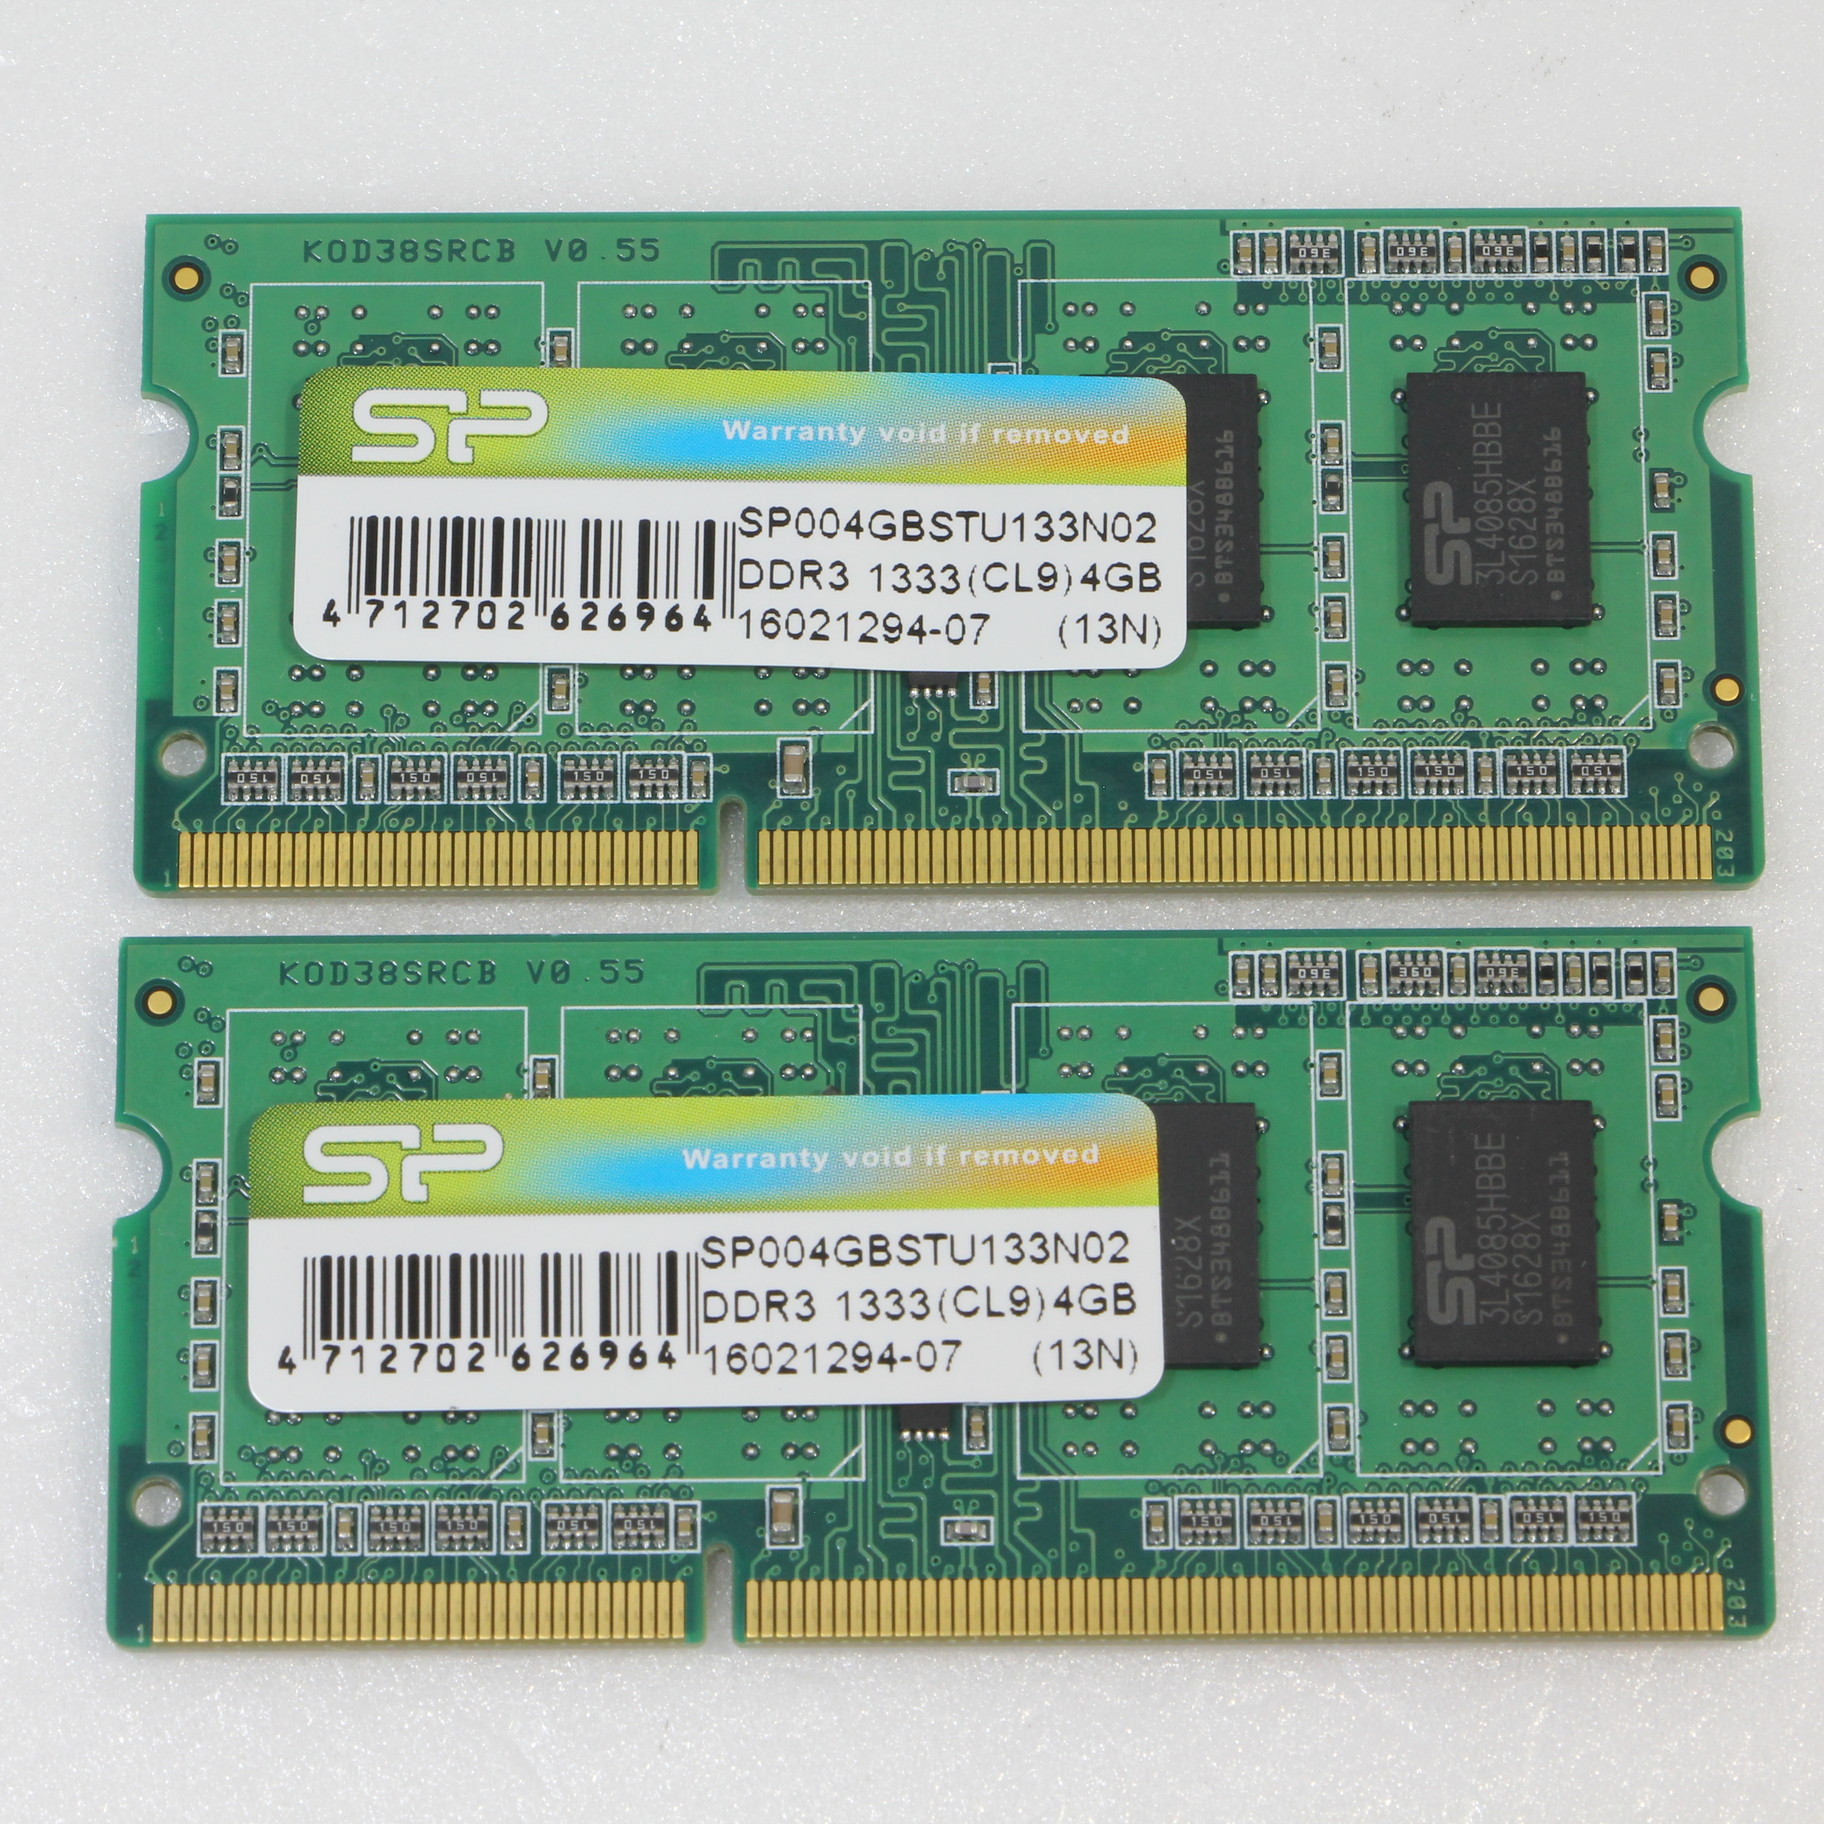 DDR3 8GB 2枚組 計16GBノート用1333 PC3-10600 新品到着後10日以内対応＊発送